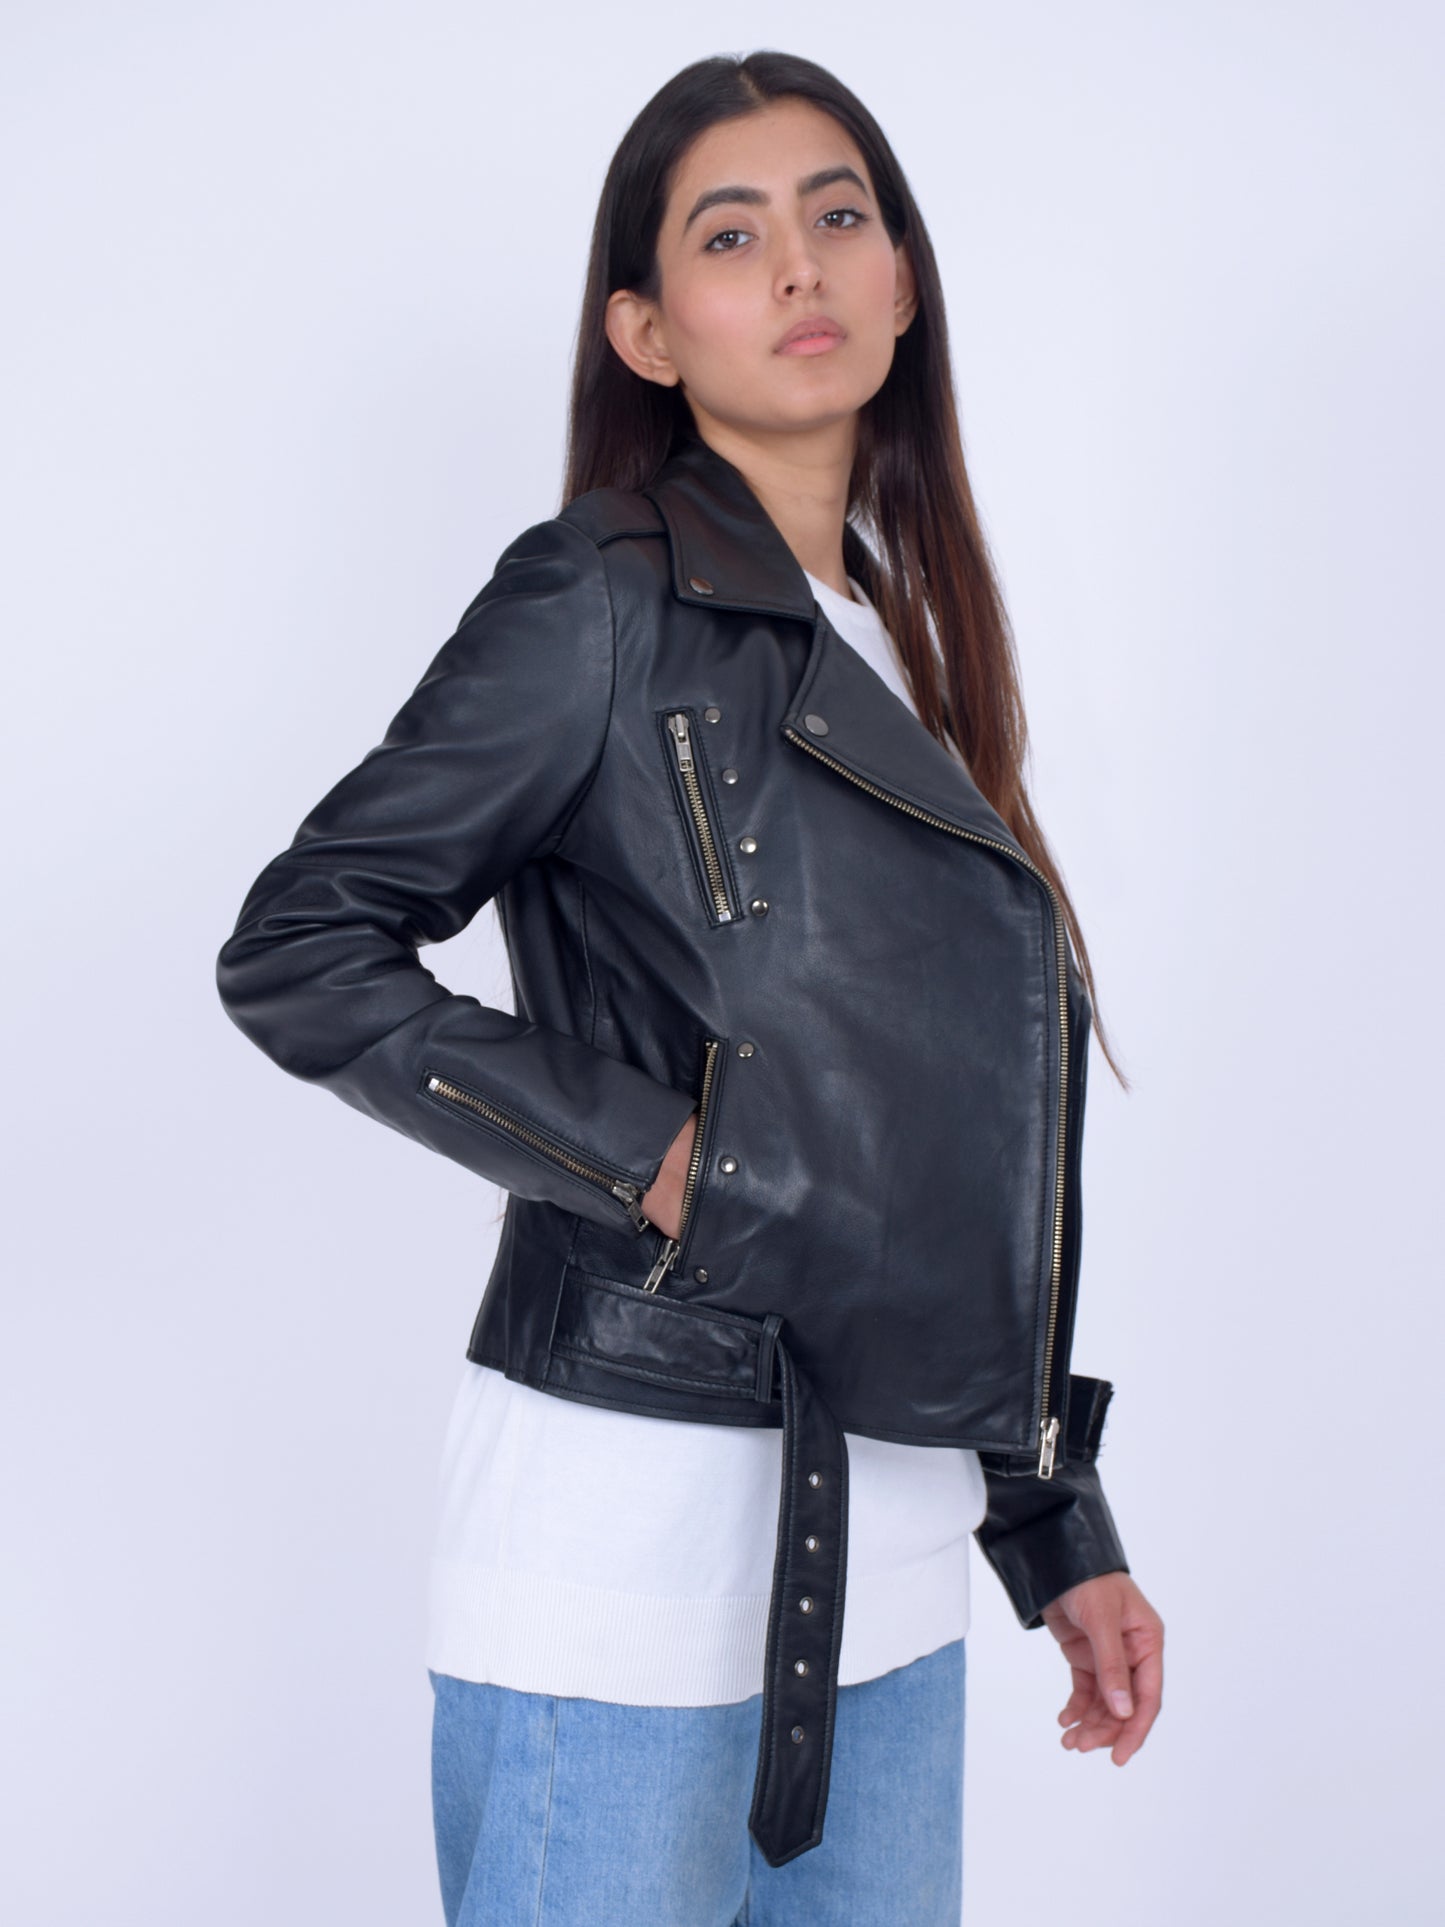 Rebellious Black Studded Biker Jacket - CASA OF K Official Online Store